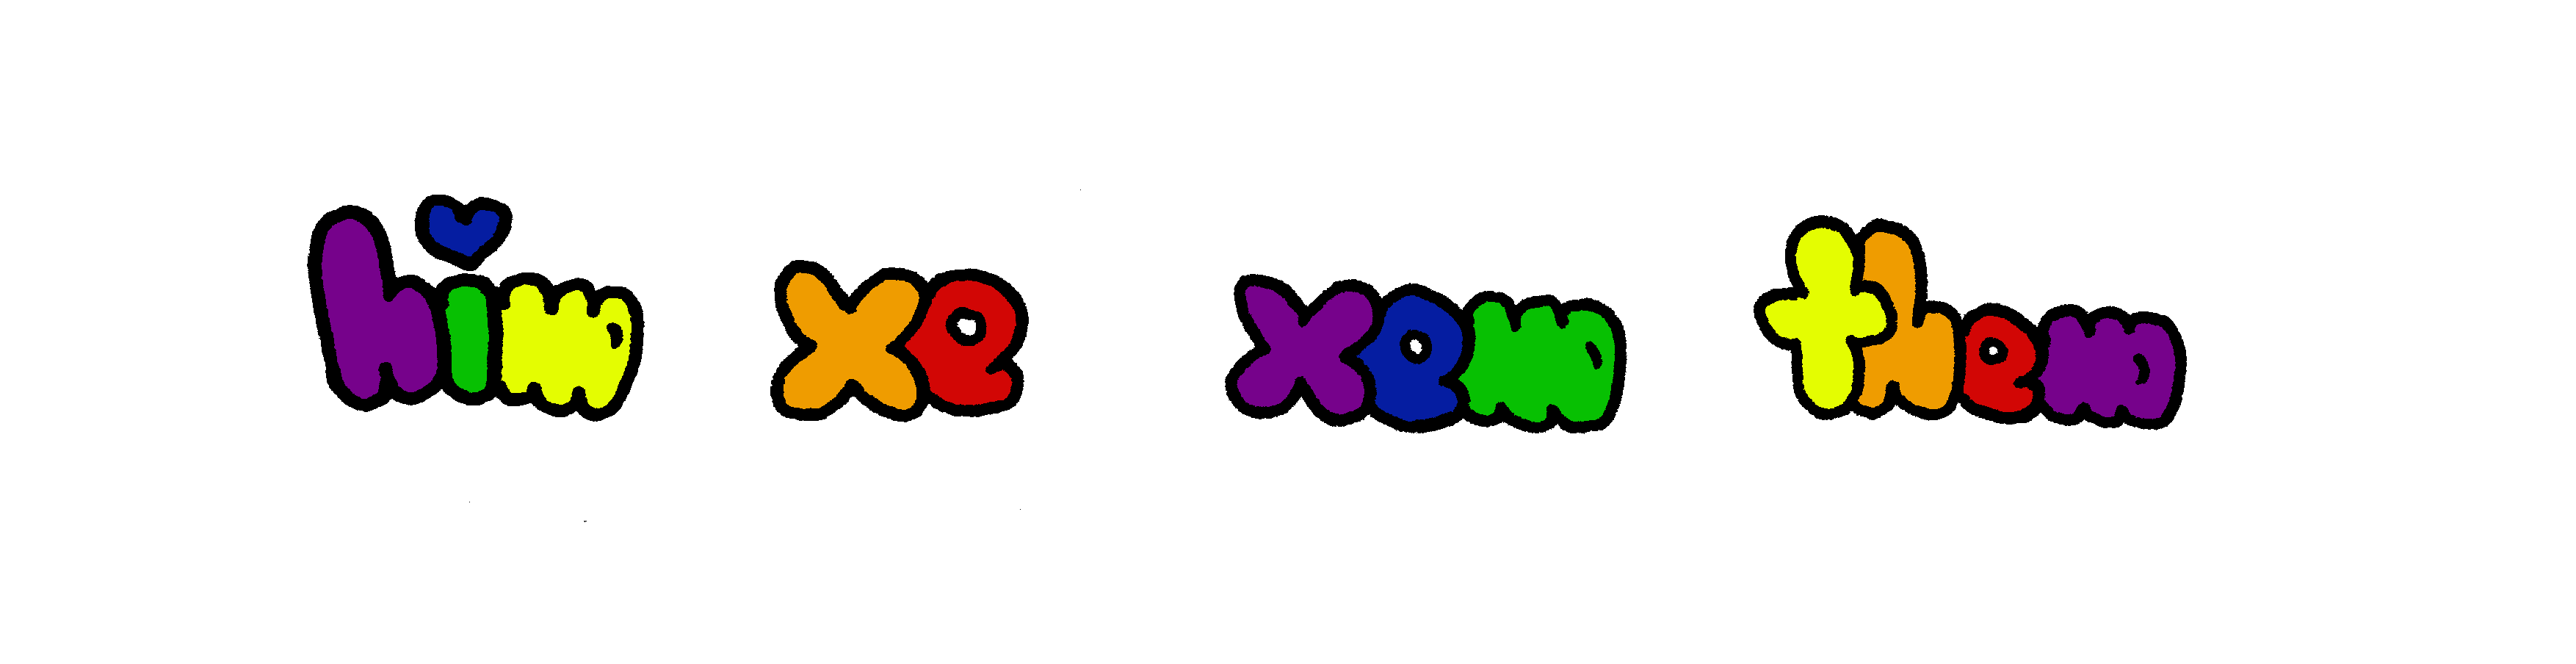 rainbow image of pronouns him, xe, xem, them